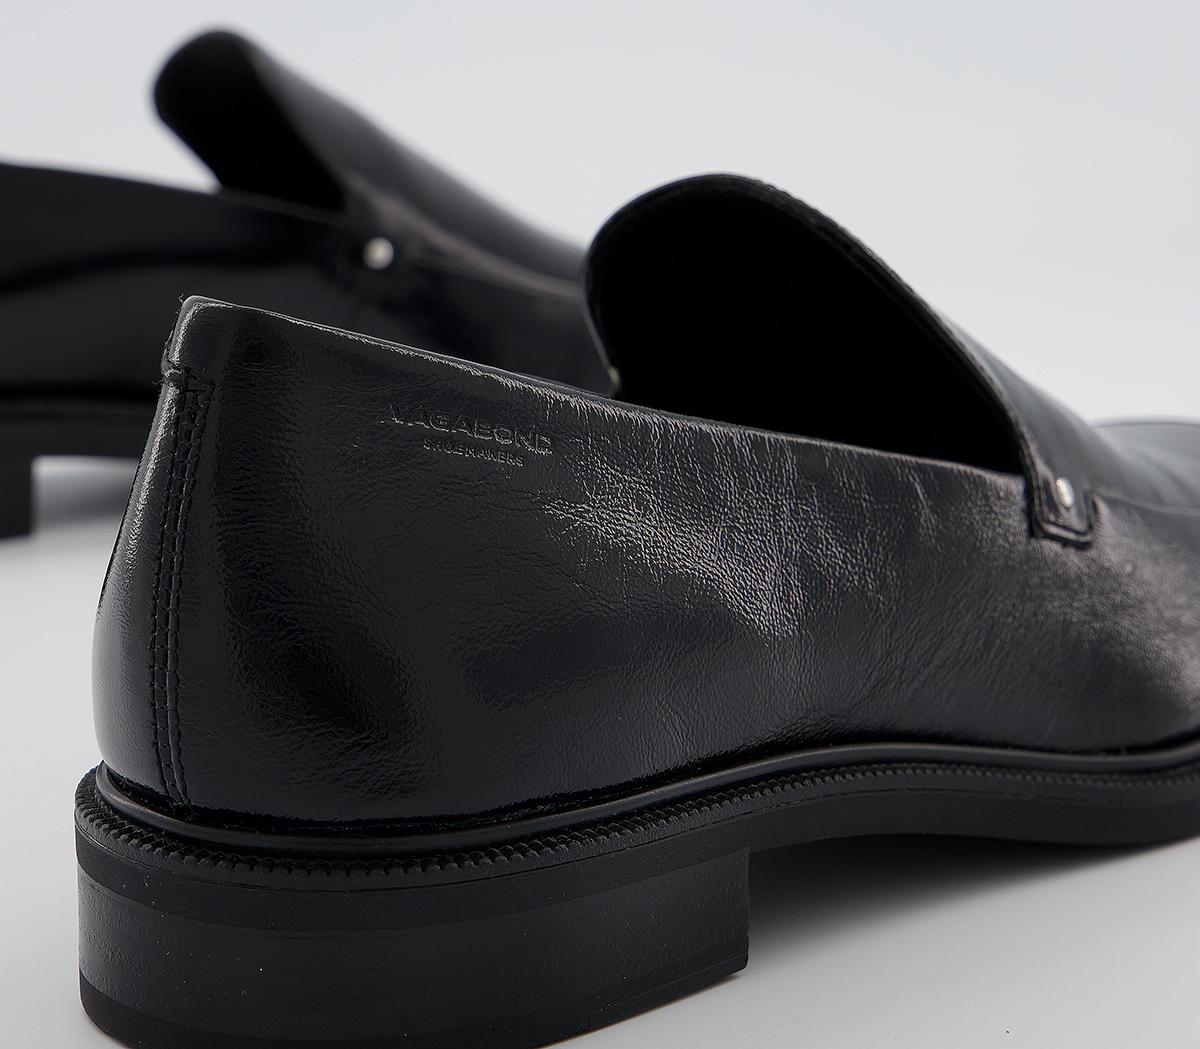 Vagabond Shoemakers Frances Loafers Black Patent - Flat Shoes for Women